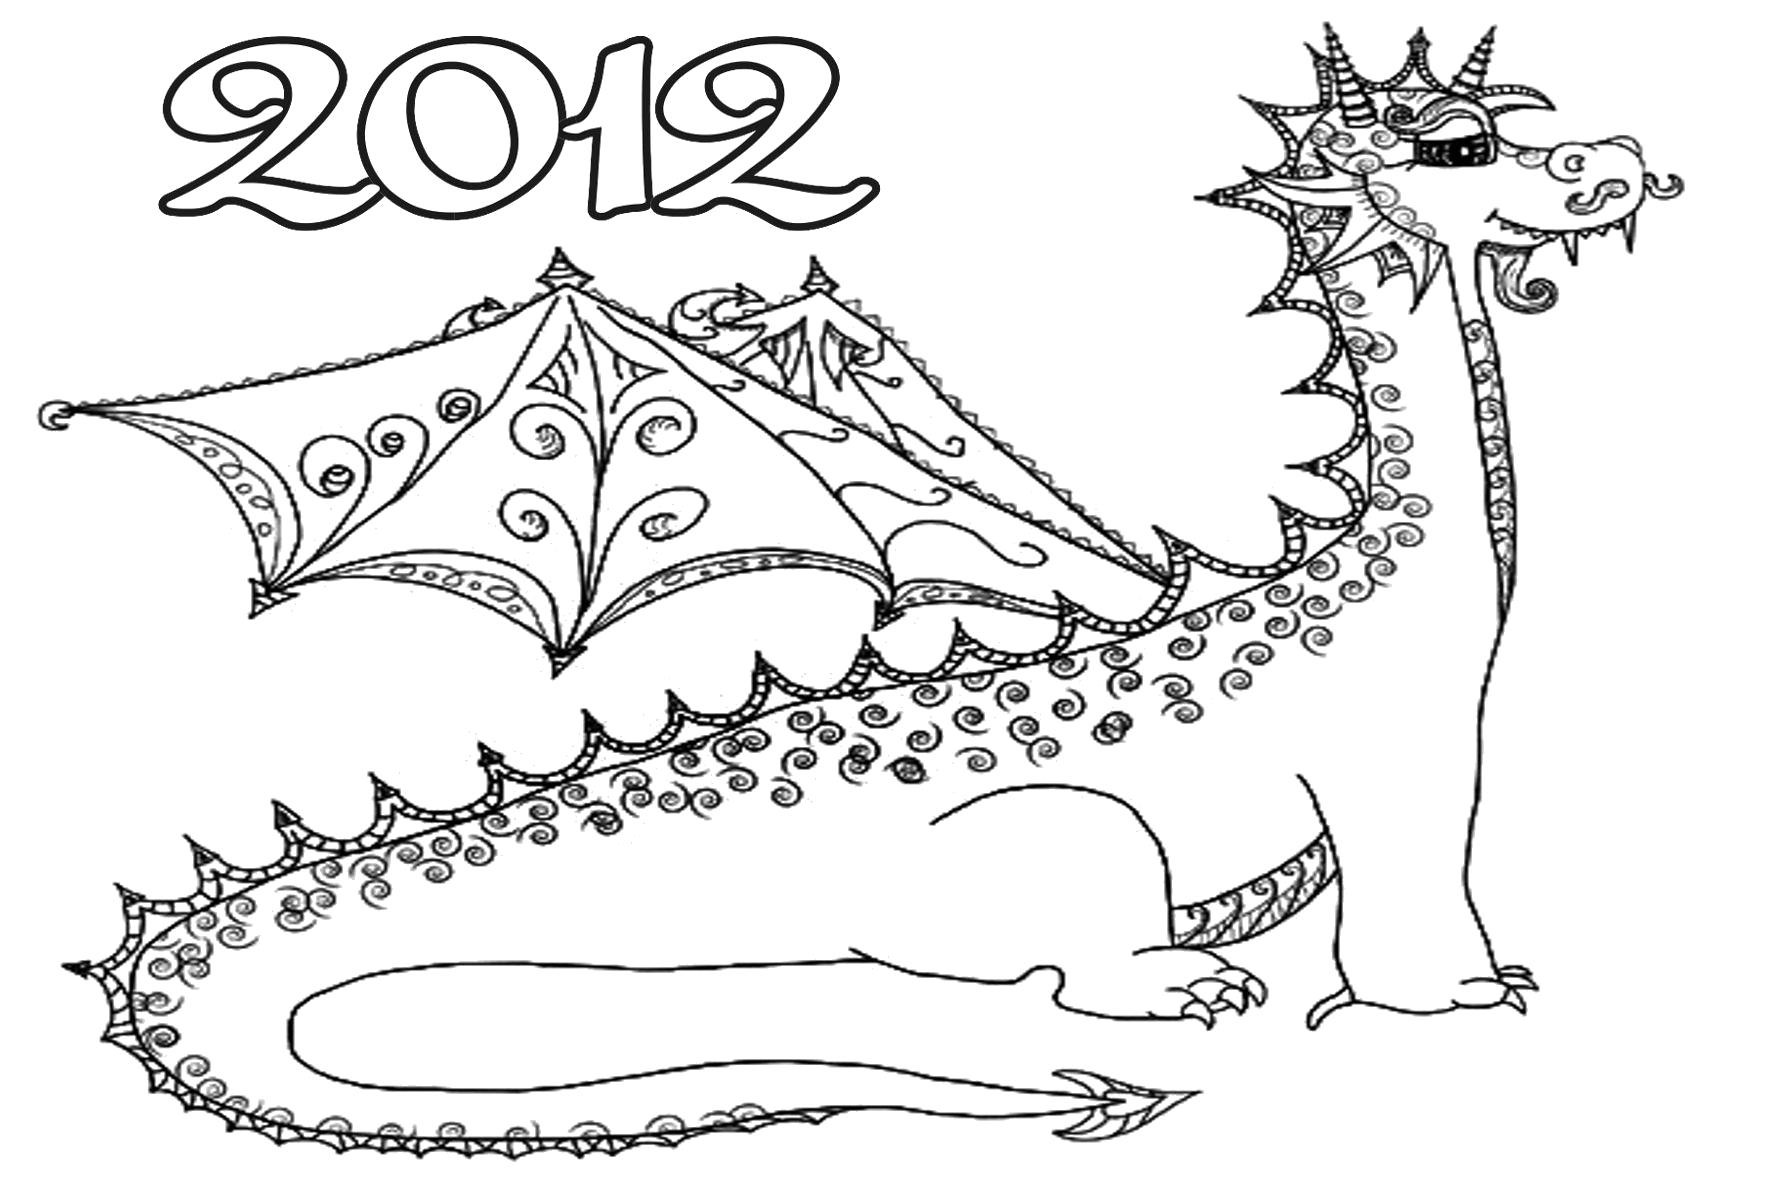 Раскраска раскраска дракон 2012. мифические существа